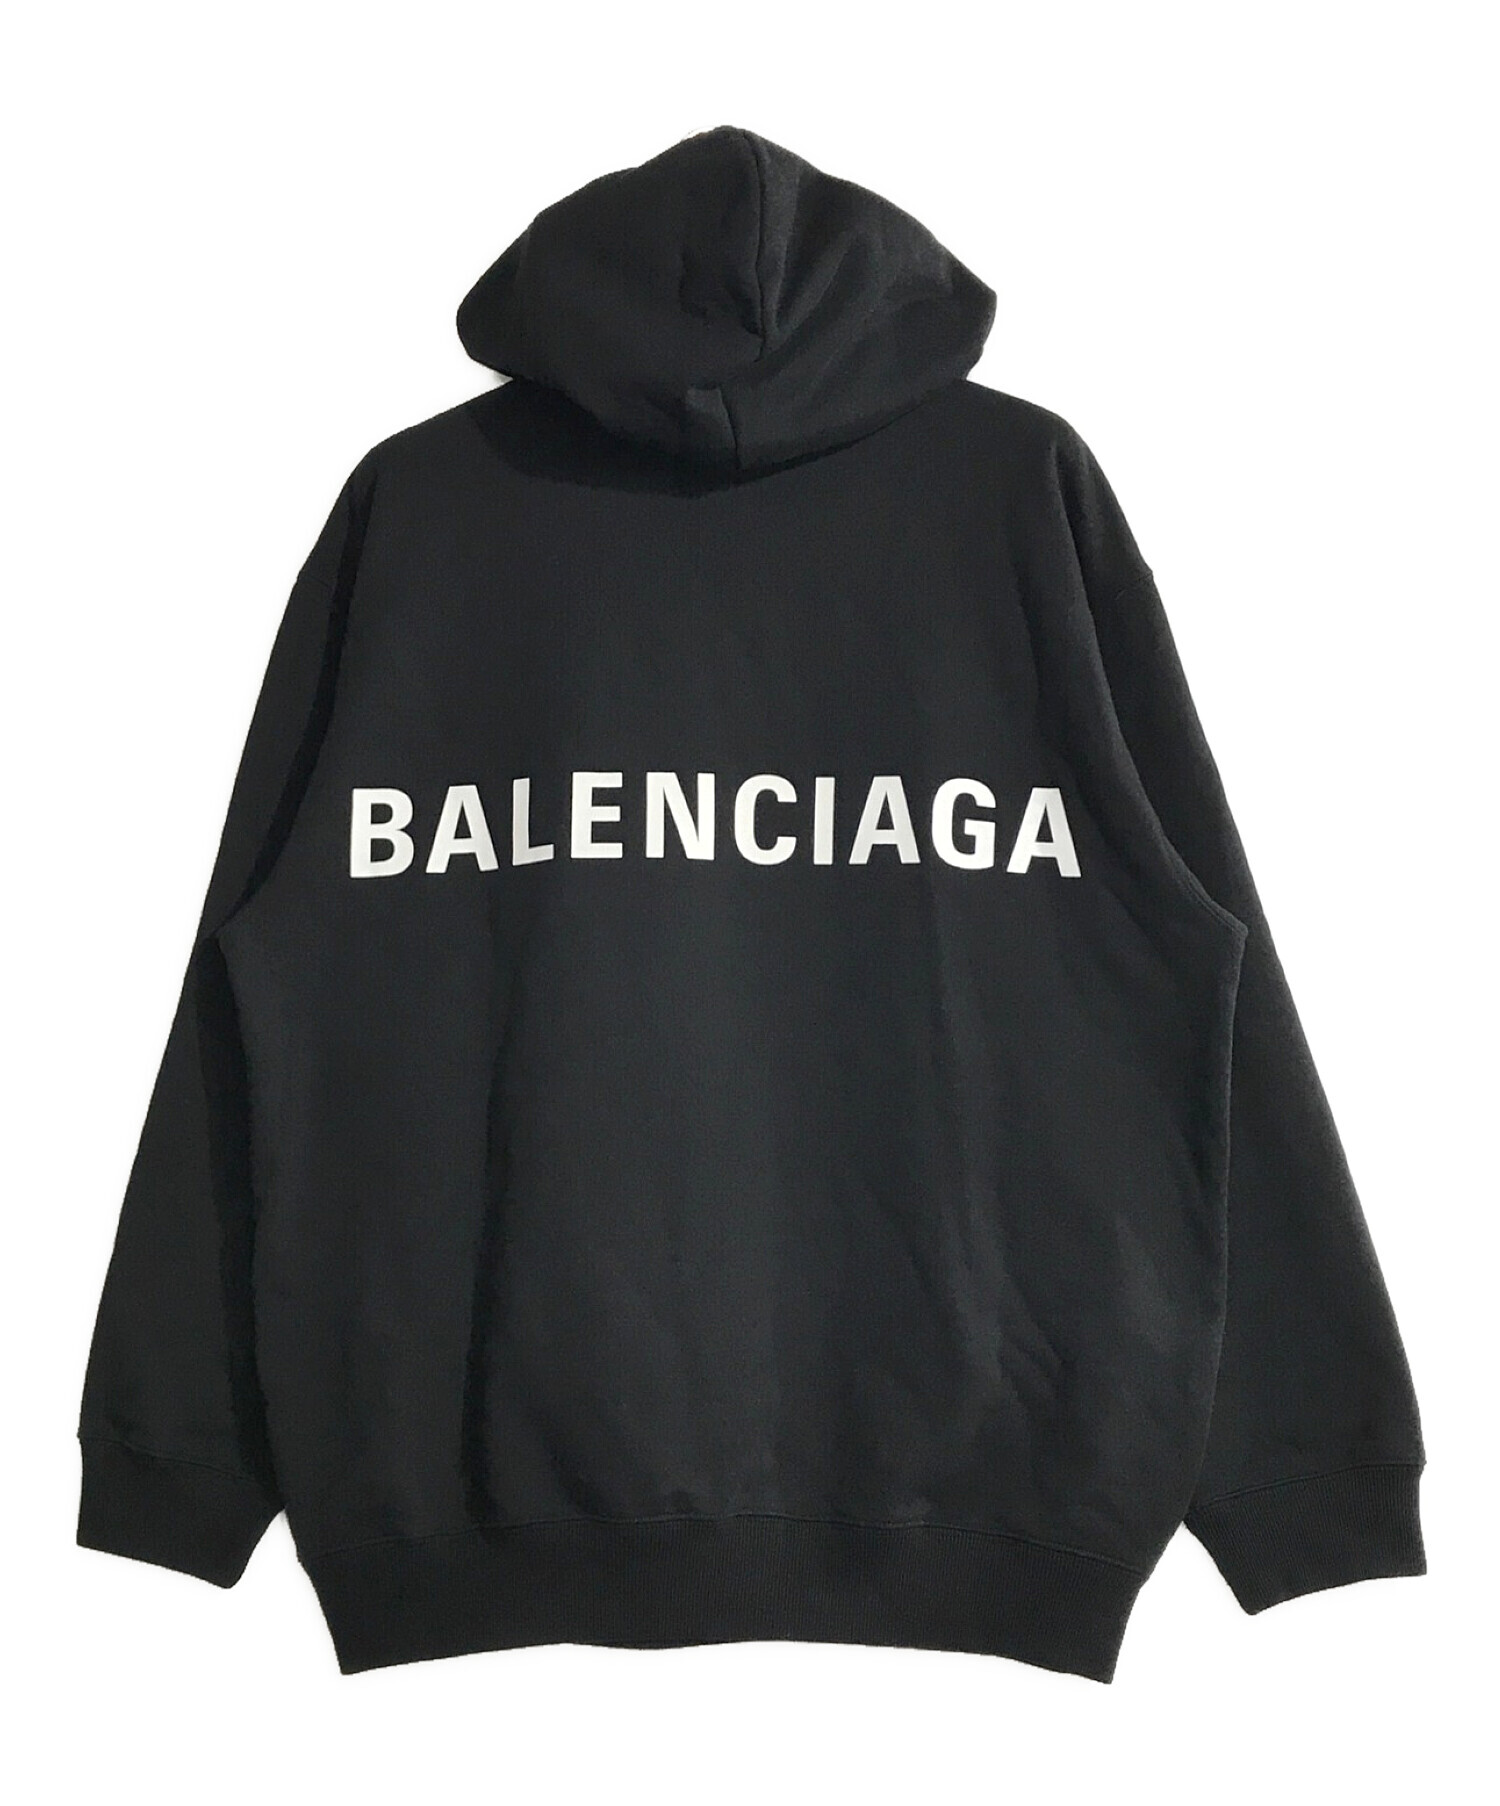 BALENCIAGA (バレンシアガ) バックロゴオーバーサイズプルオーバーパーカー ブラック サイズ:M